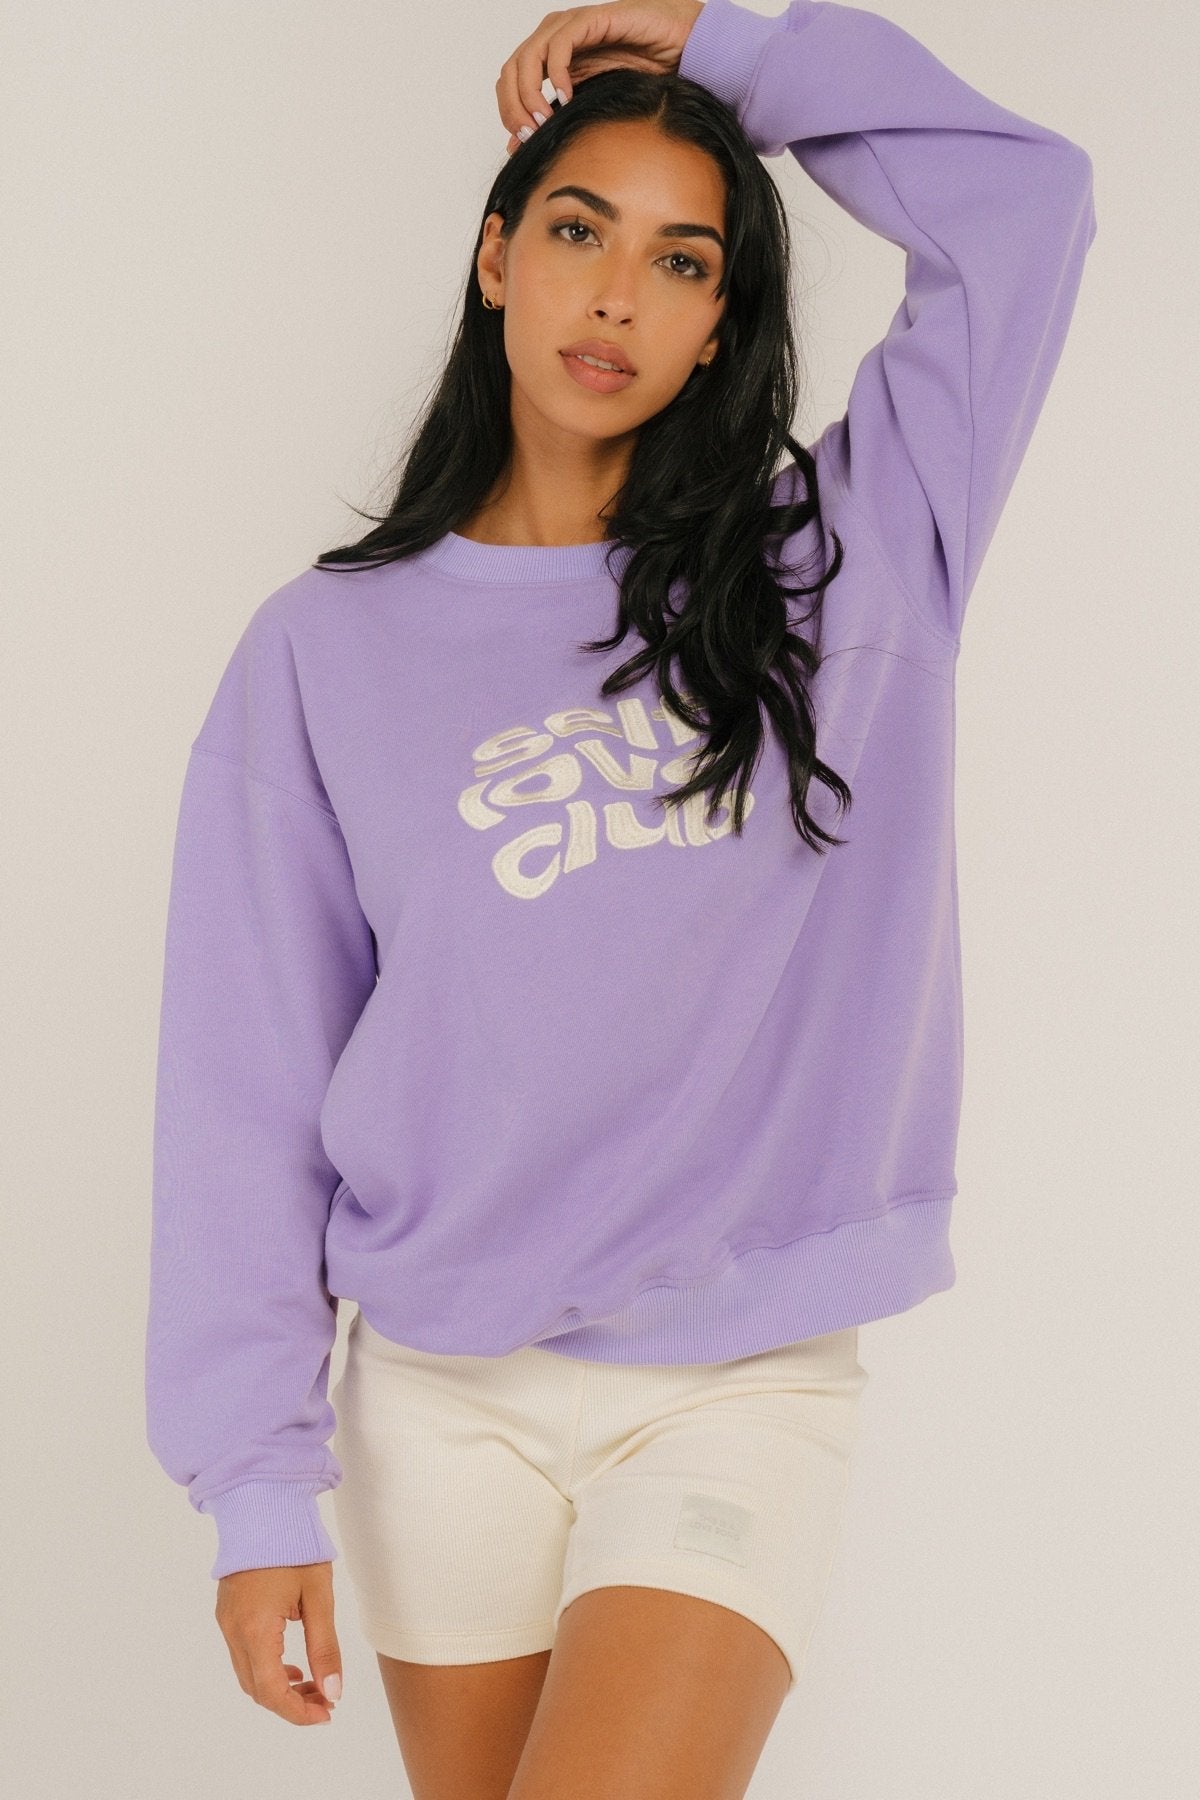 APPAREL - Self Love Club Sweatshirt (Lilac)